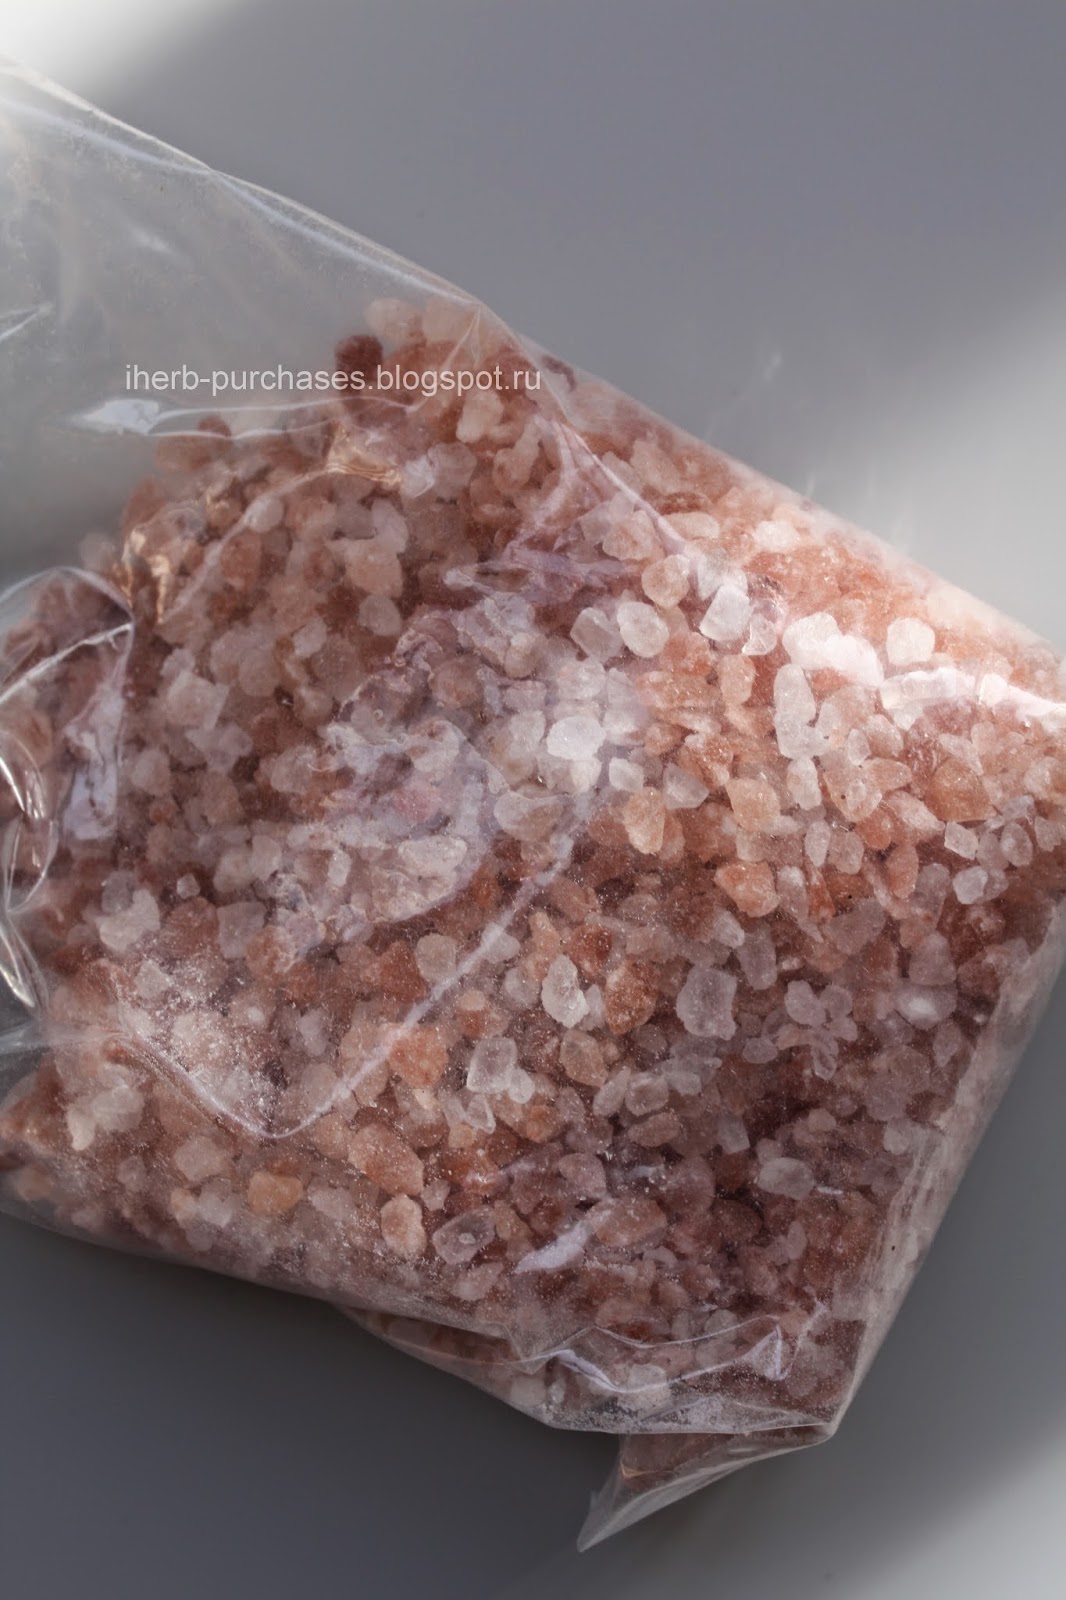 Aloha Bay, Himalayan Crystal Salt, Coarse, 18 oz (510 g)